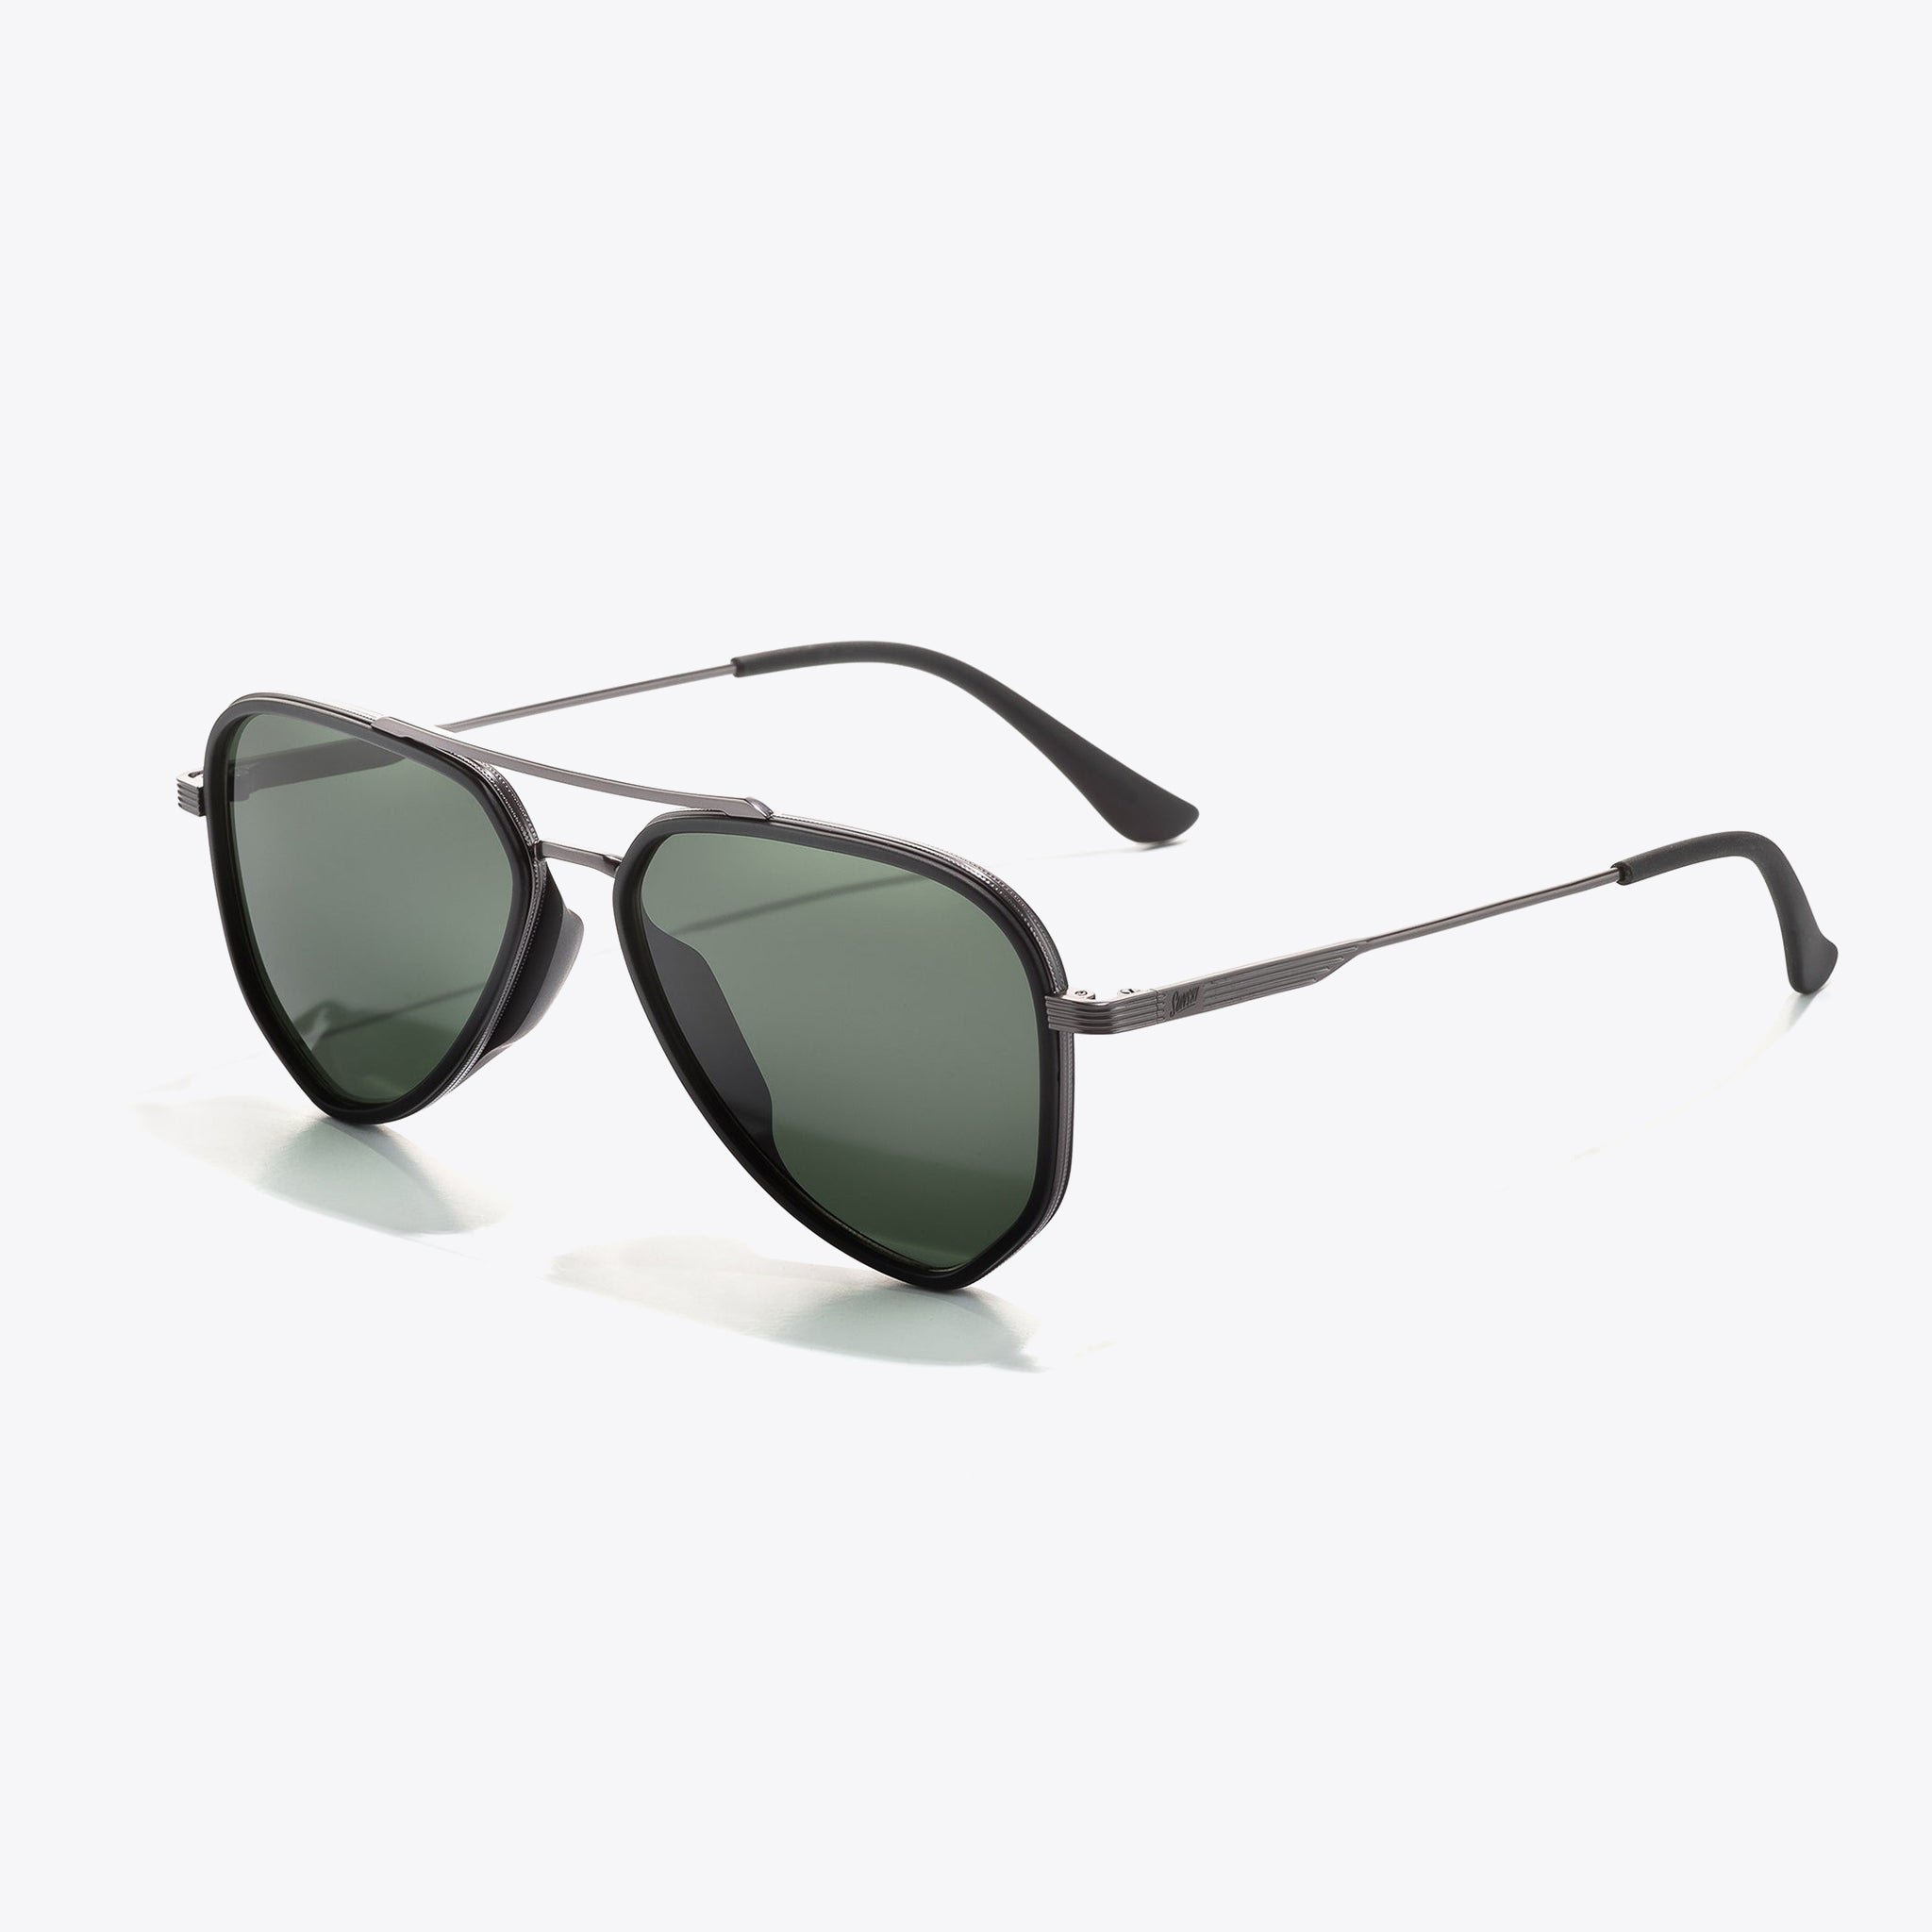 Product Image 2 of the Sunski Astra Sunglasses Black Forest